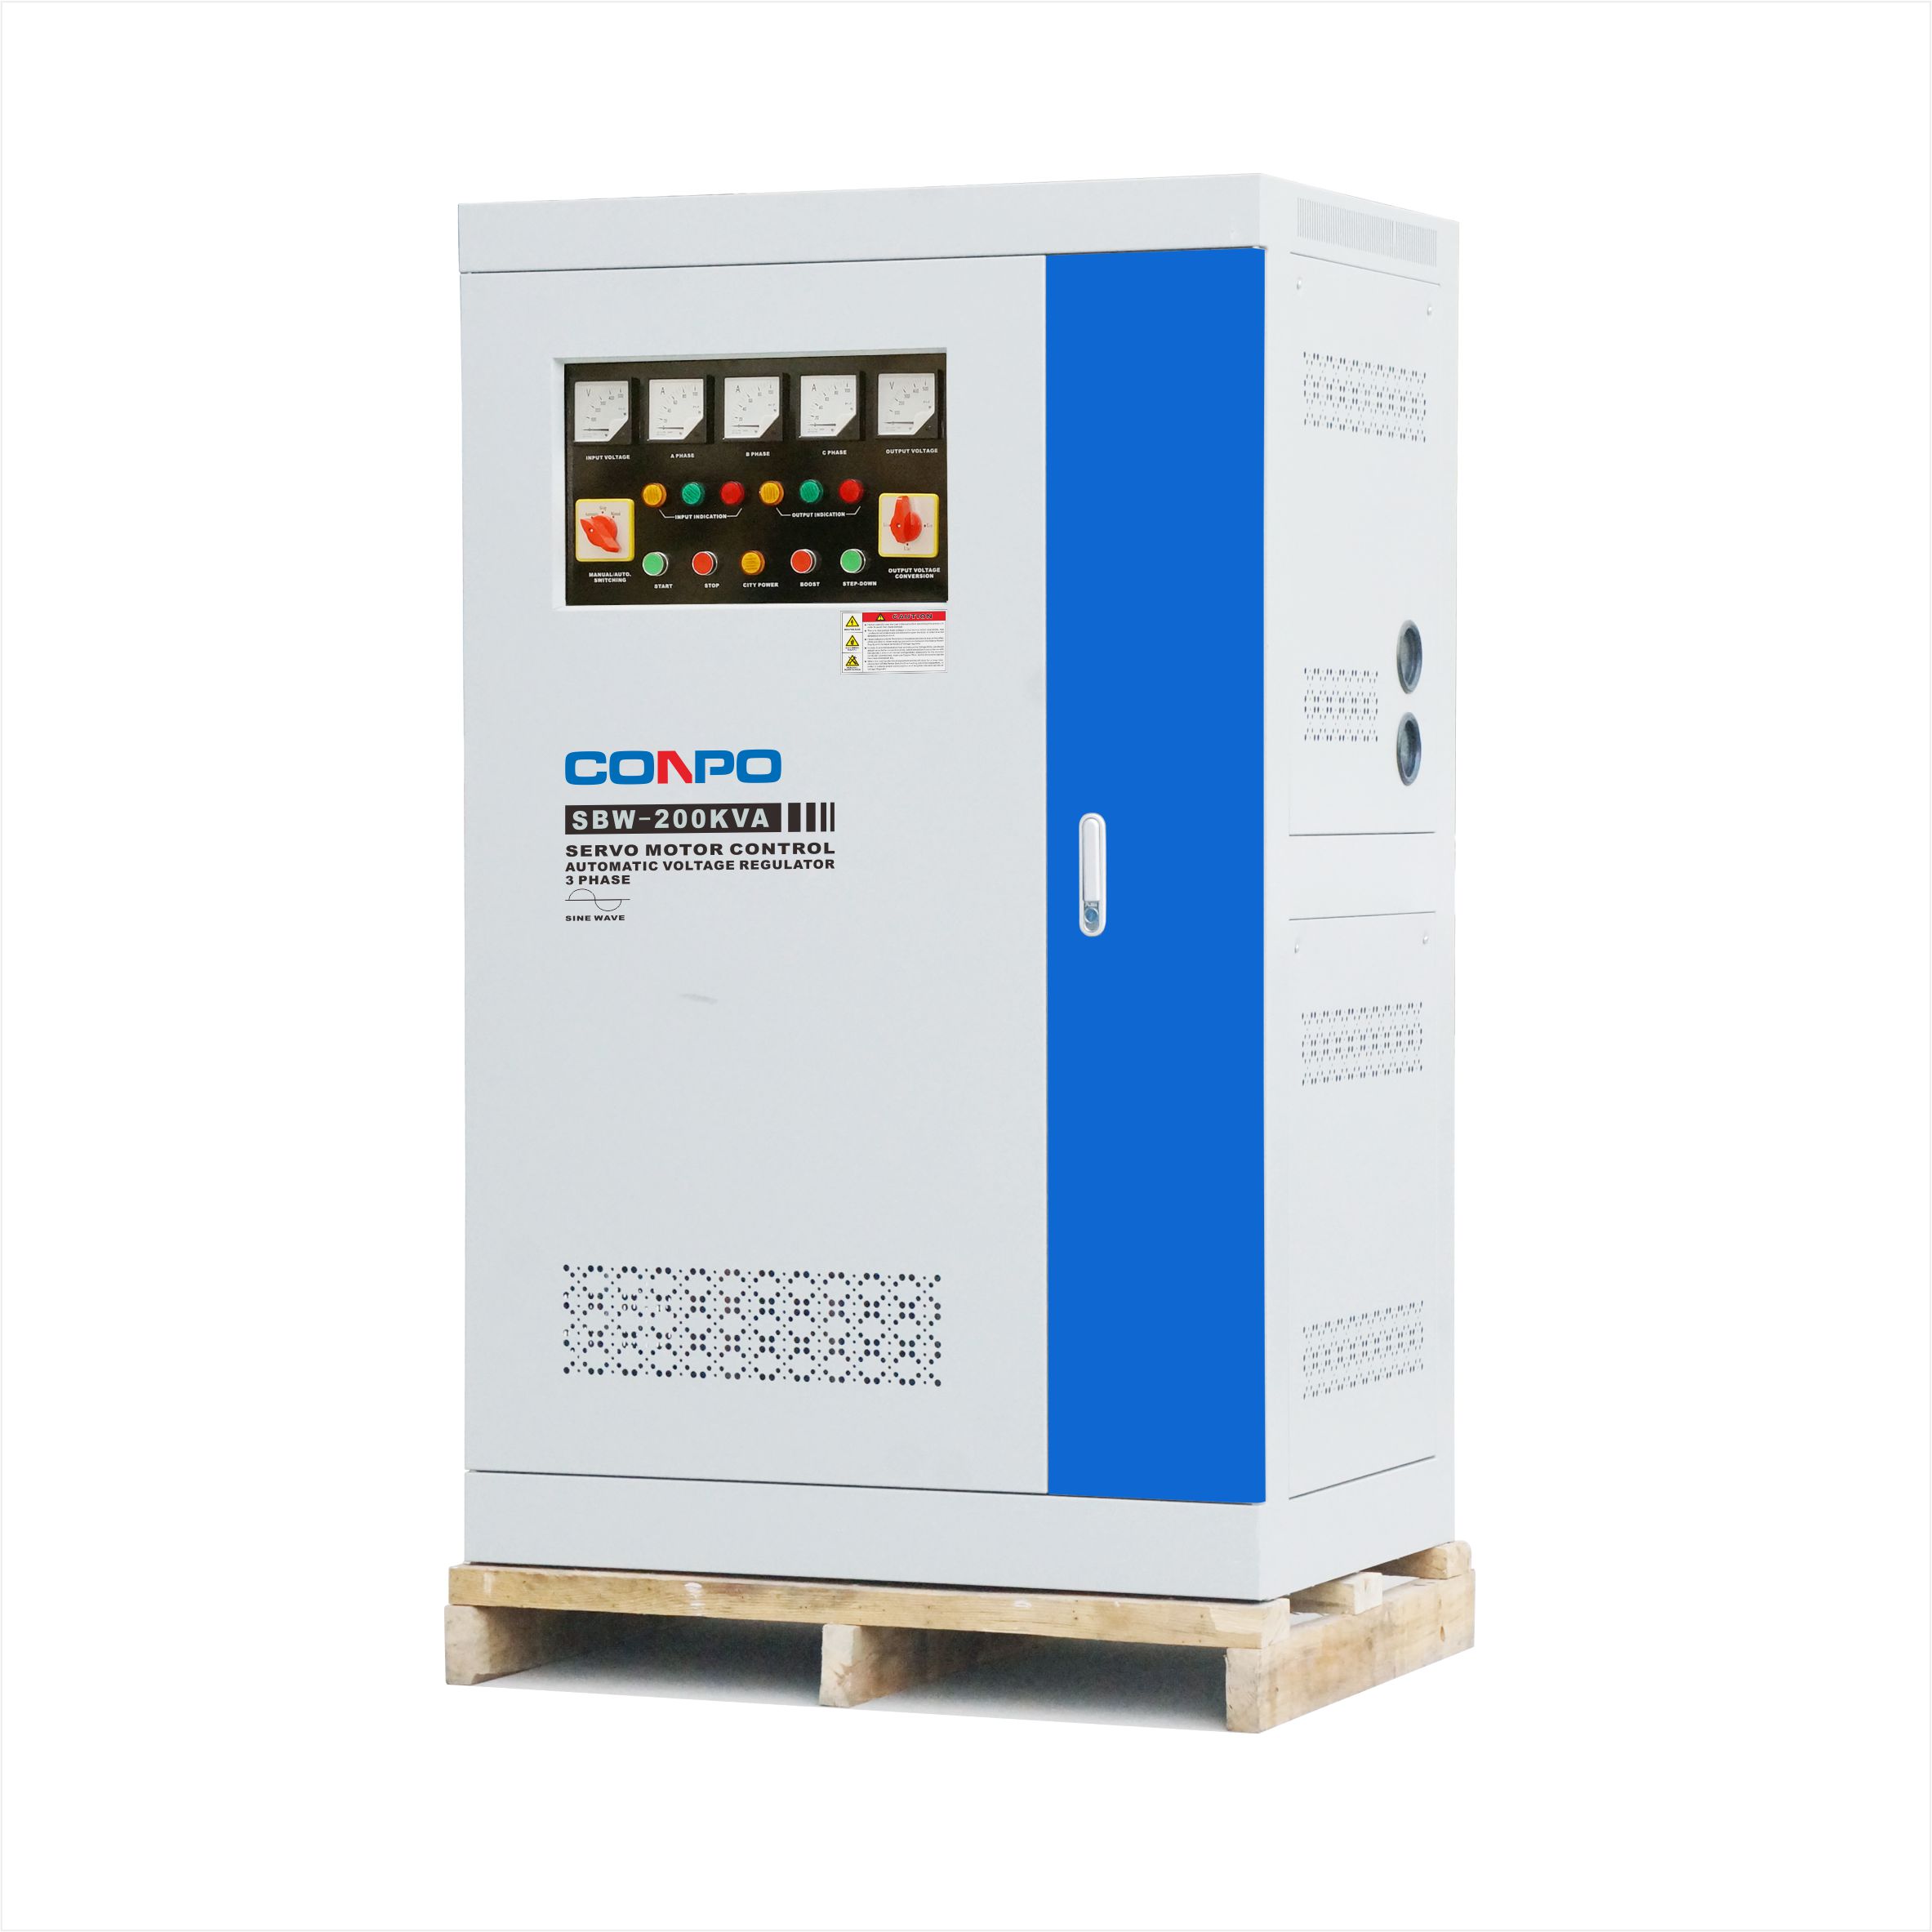 SBW-150KVA, 180KVA, 200KVA 3Phase Industrial-grade Automatic Voltage Regulator/Stabilizer